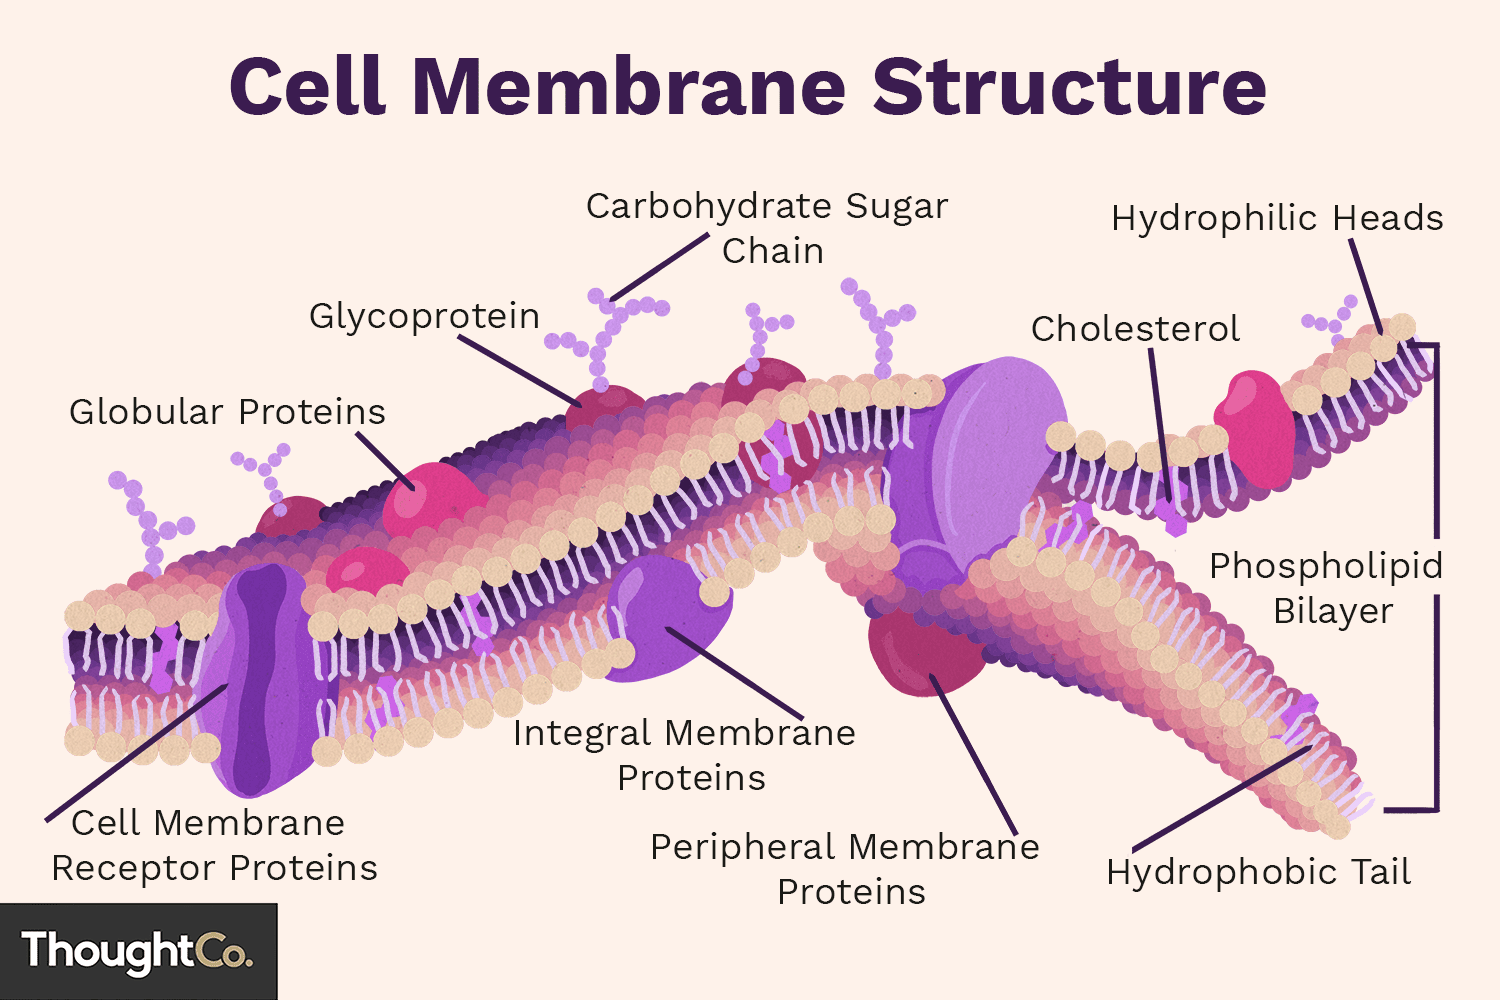 <ul><li><p>all cells have to maintain homeostasis</p></li><li><p>cell/plasma membrane - phospholipid bilayer</p></li></ul><p>Phospholipid:</p><ul><li><p>phosphate head (hyrophollic, polar)</p></li><li><p>lipid tails (hydrophobic, nonpolar)</p></li></ul>